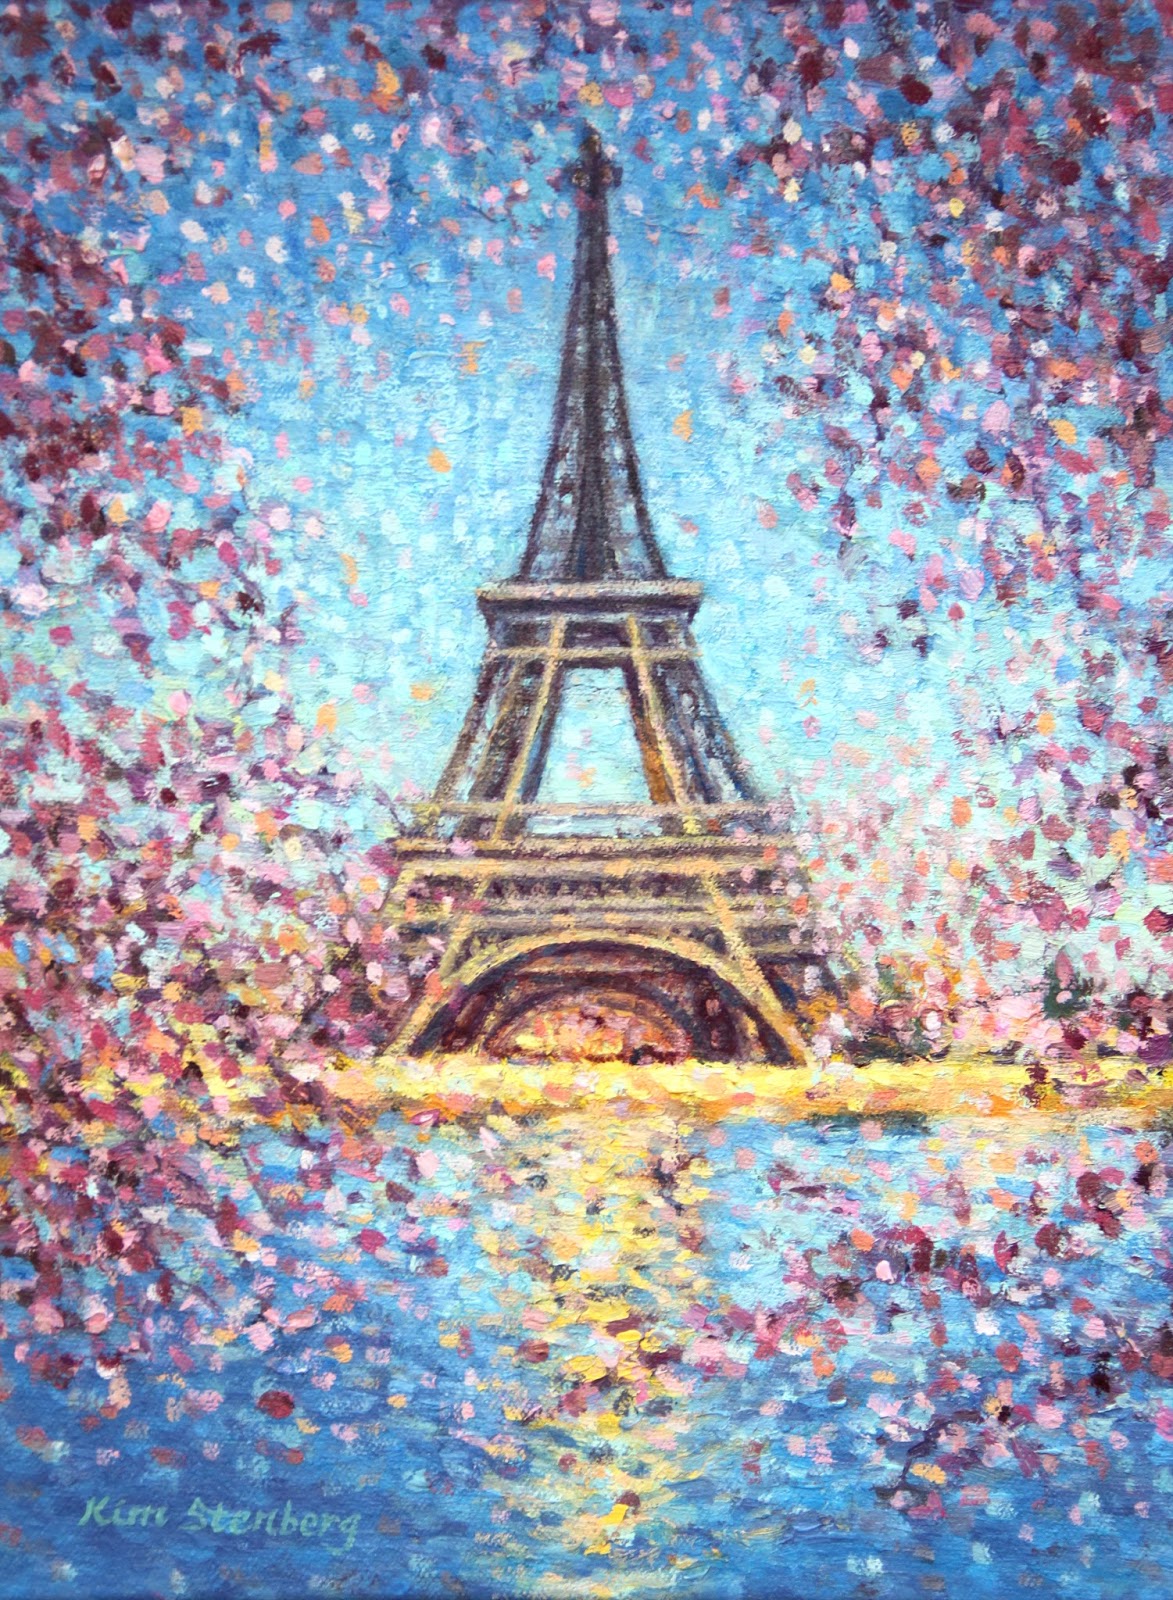 Kim Stenberg's Painting Journal: "Eiffel Tower Spring" (oil on